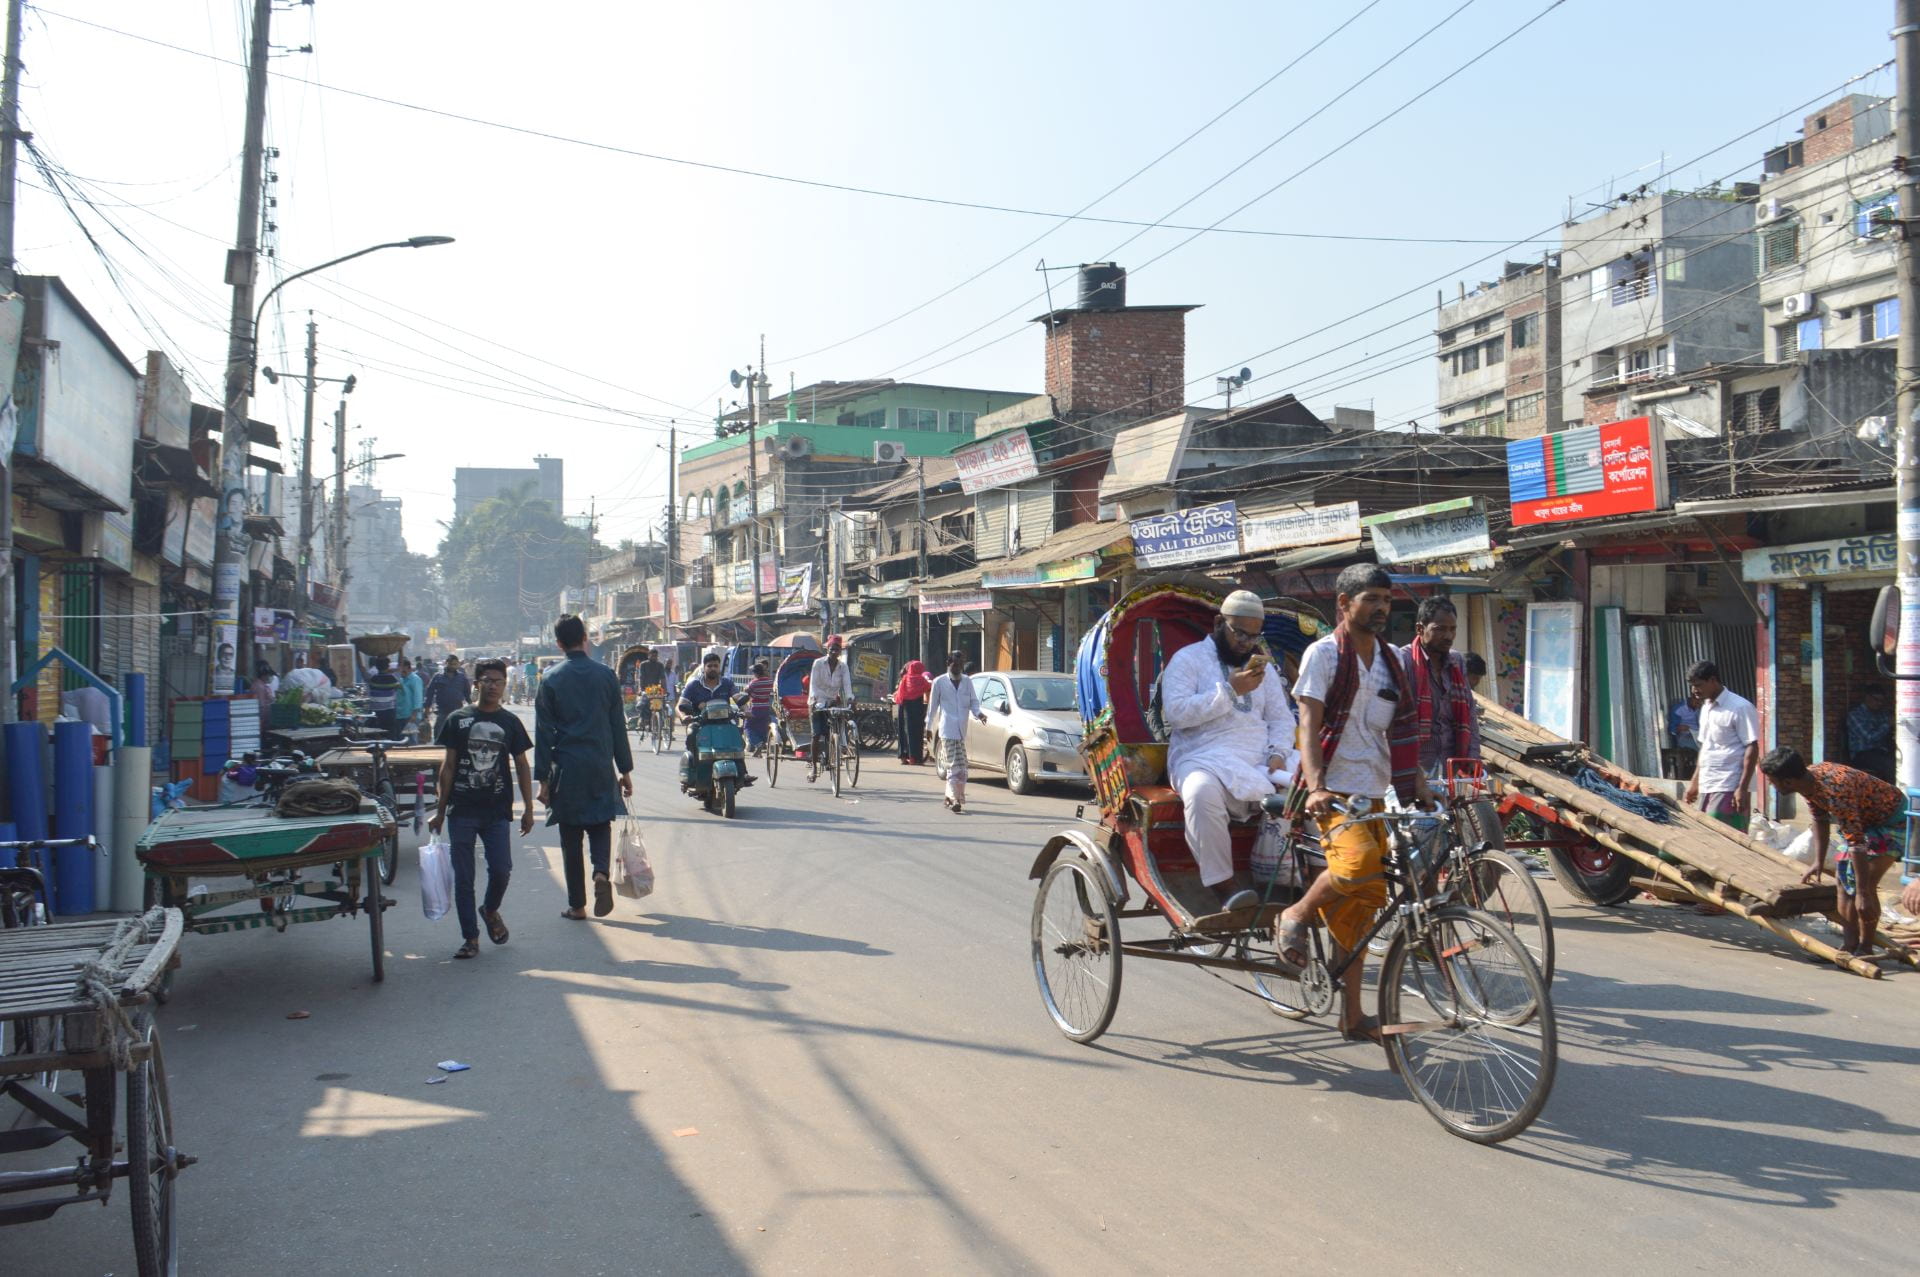 People in the street in Dhaka, Bangladesh.